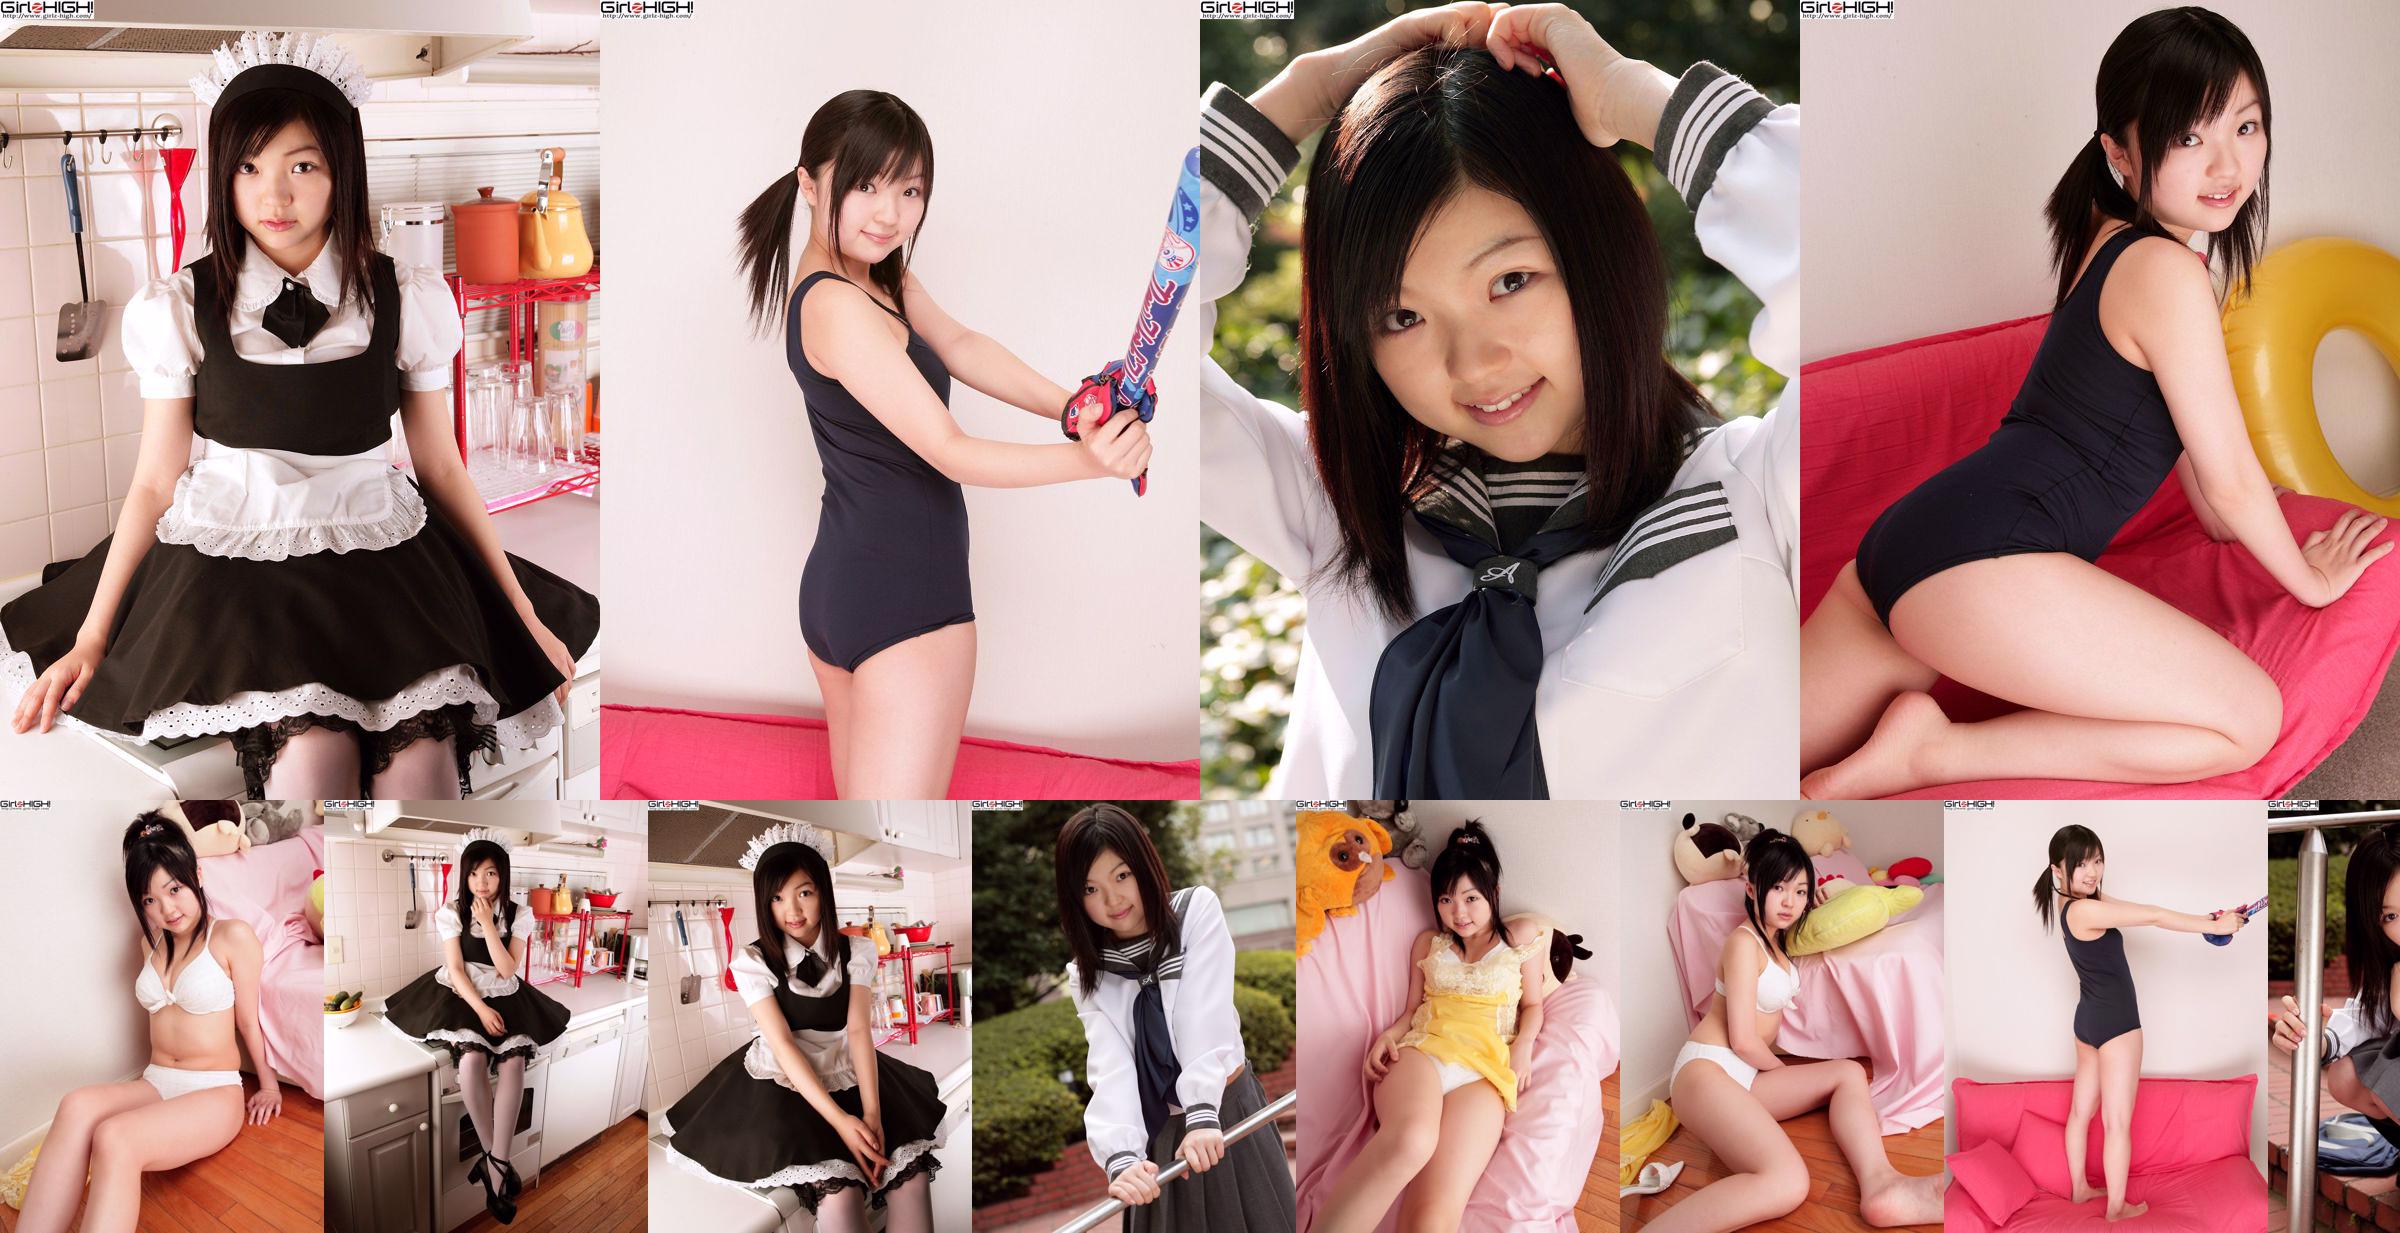 [Girlz-High] Misaki Moe Misaki Gravure Gallery-g074 Conjunto de fotos 04 No.fd1454 Página 1